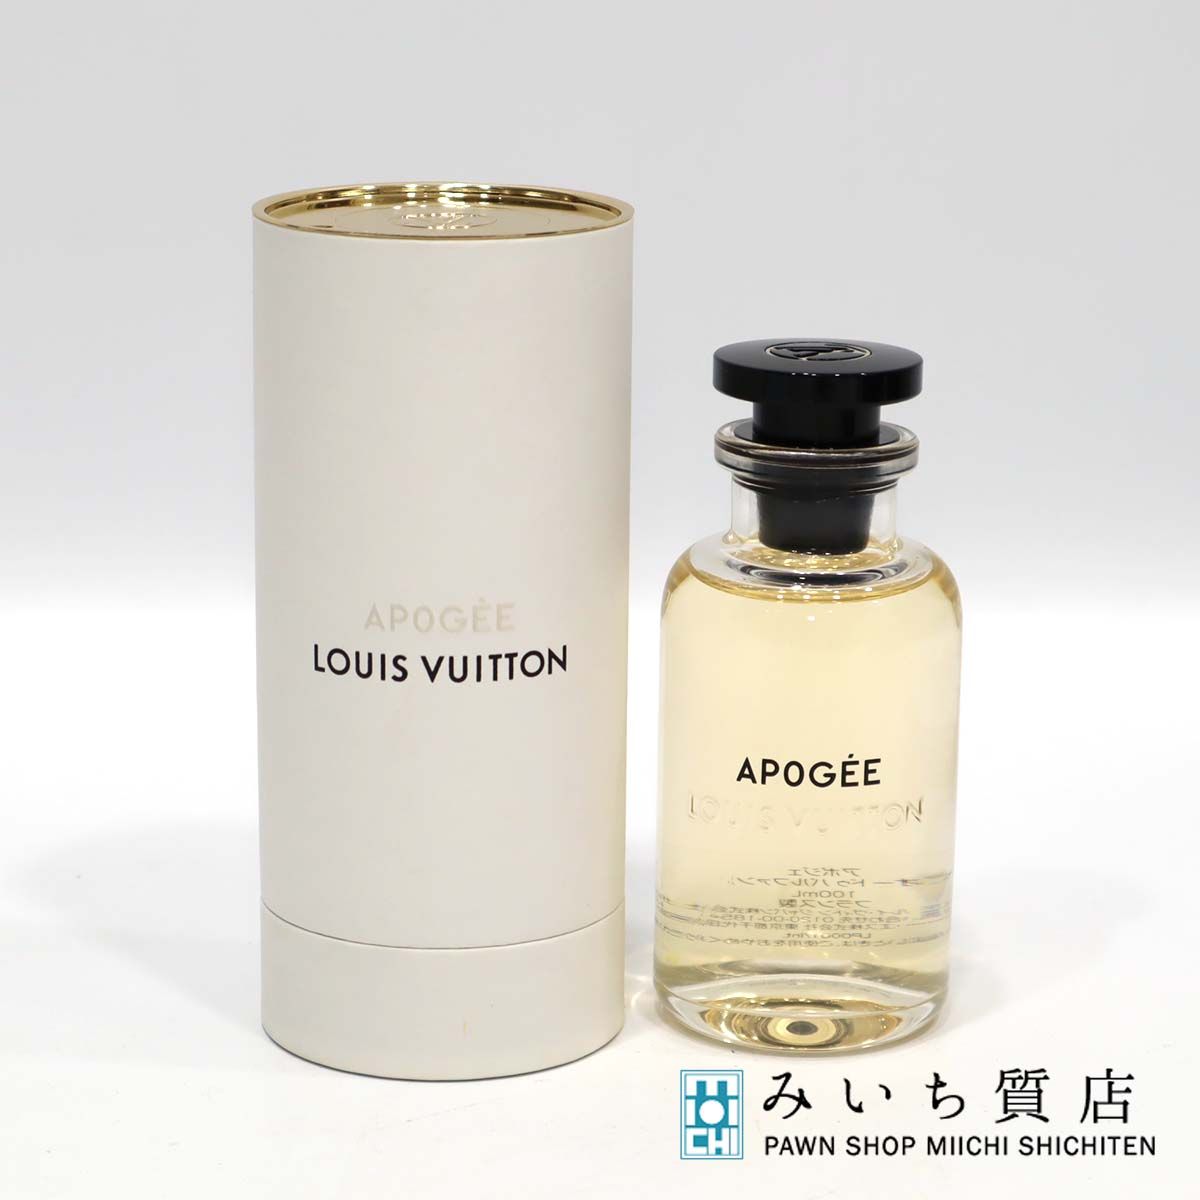 LOUIS VUITTON 香水 トラベルスプレー クールバタン 7.5ml×4 - 香水